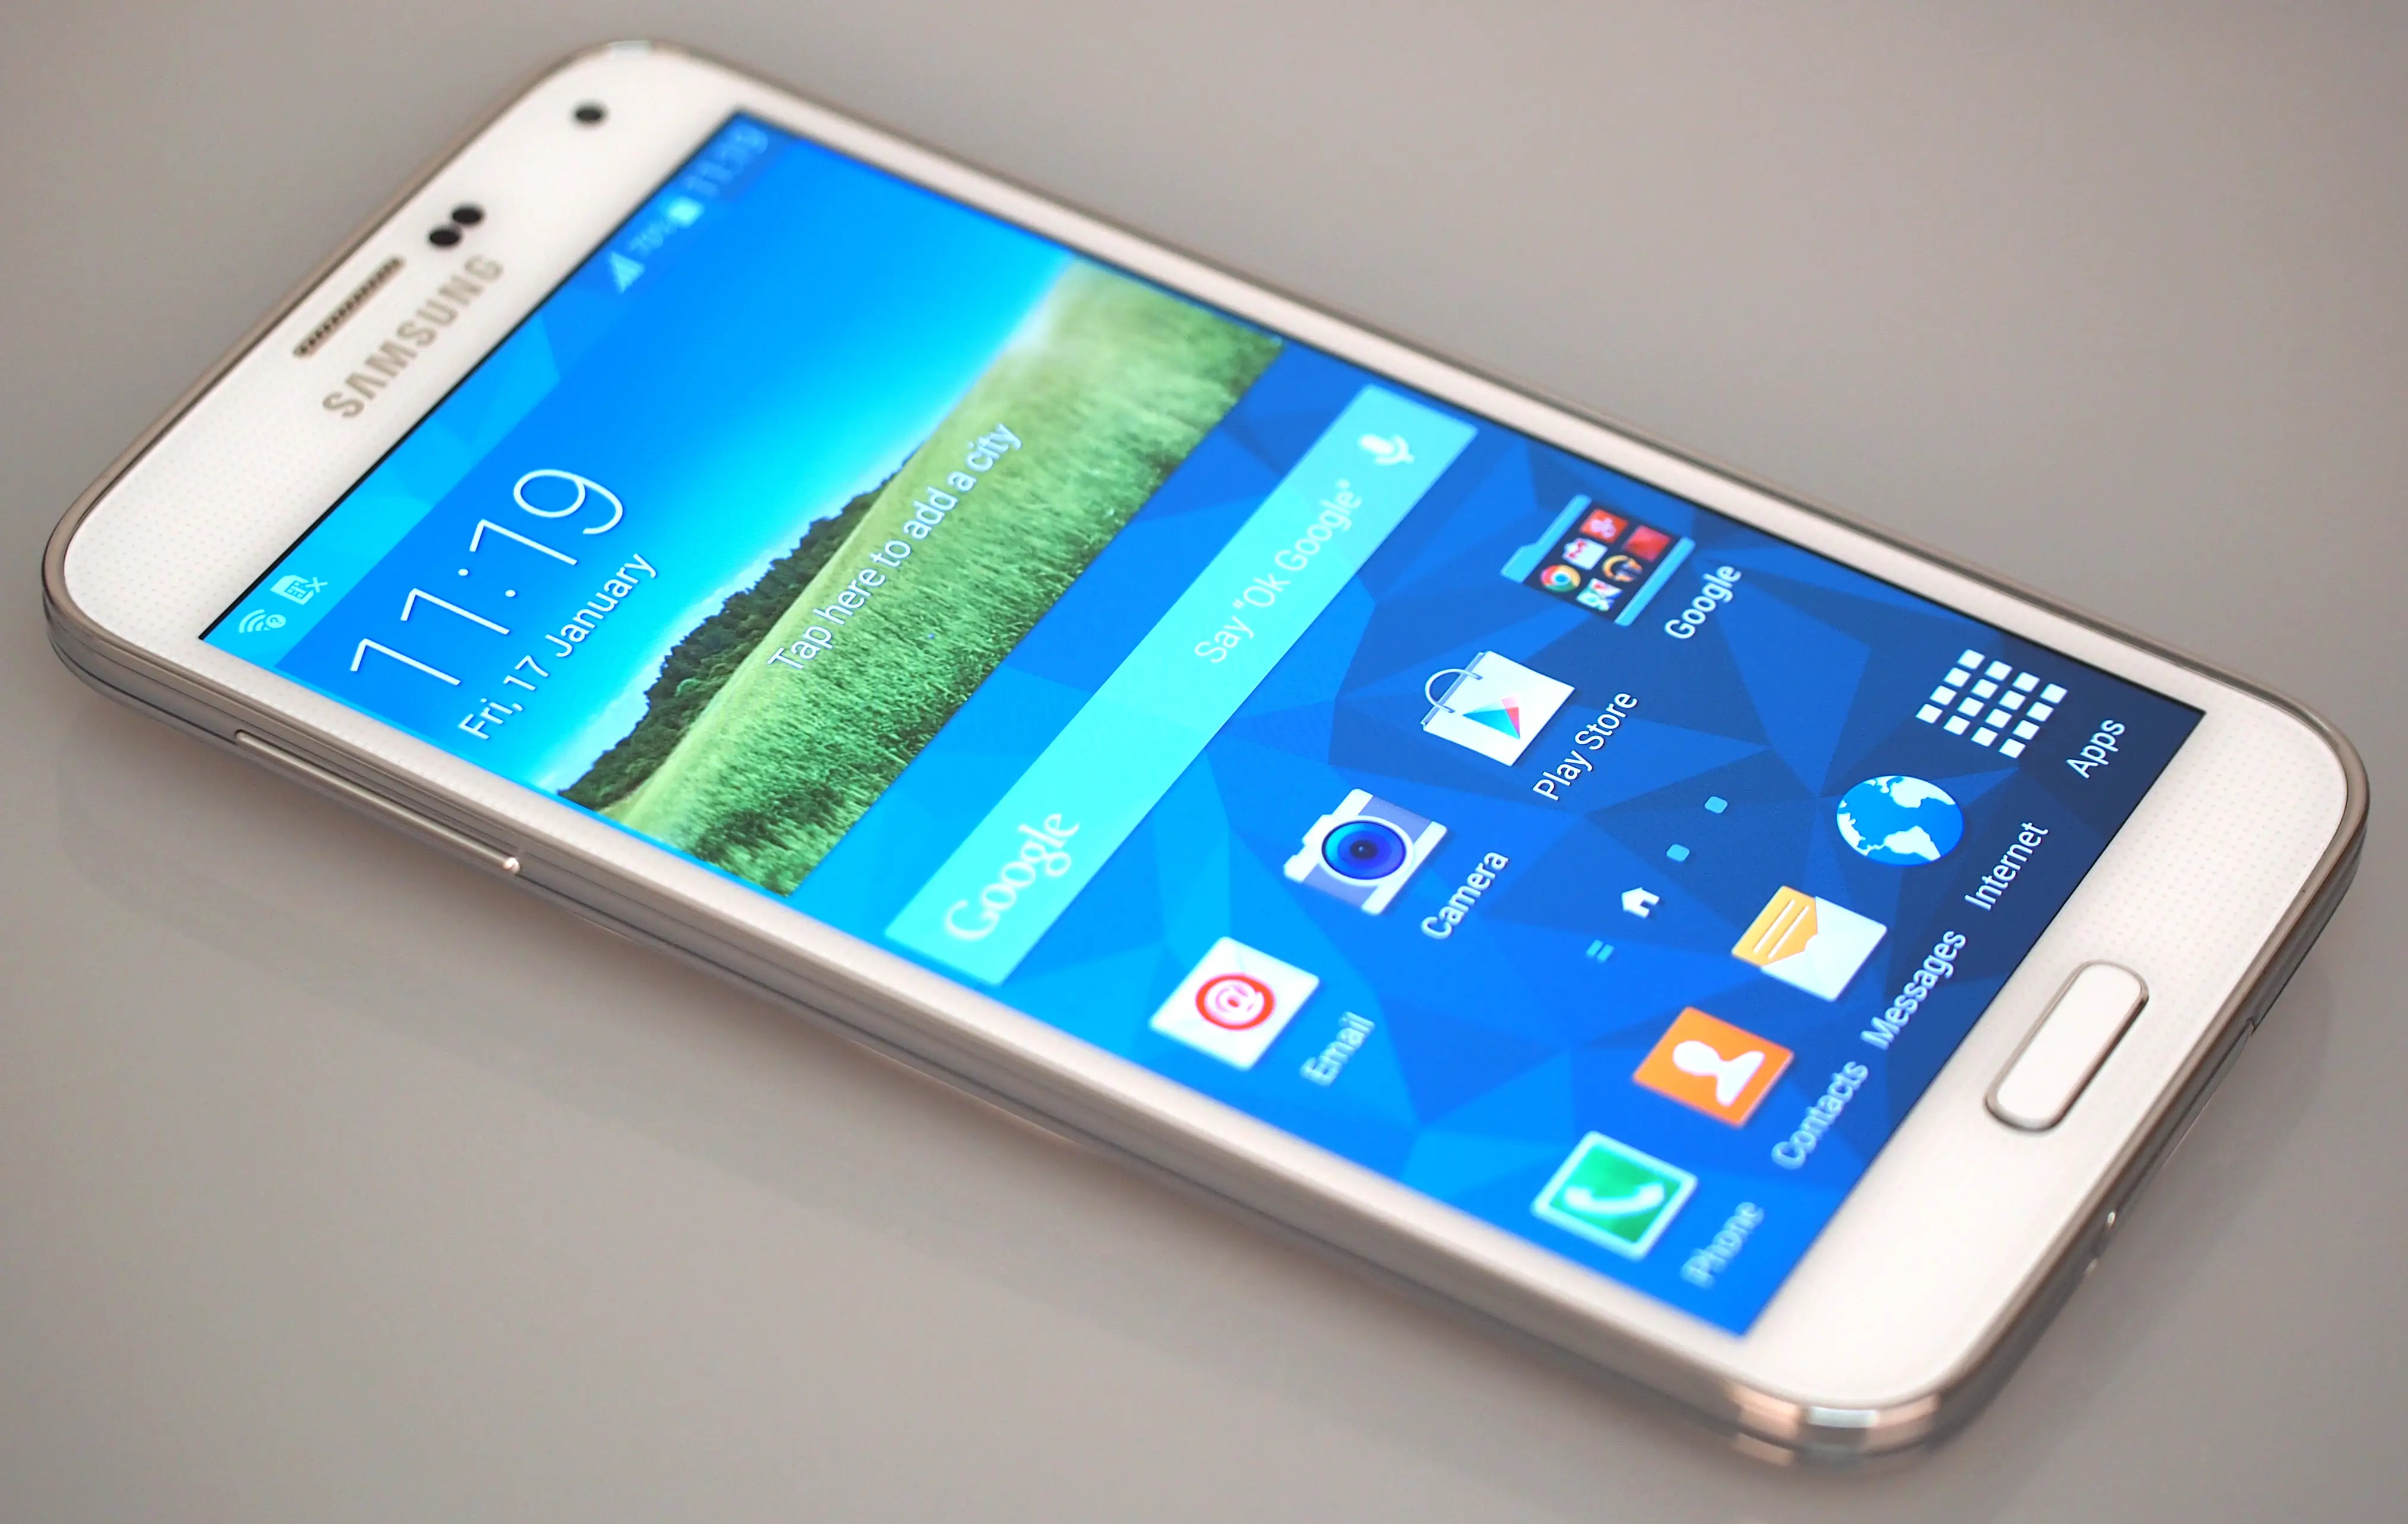 Samsung Galaxy S Advance - SamMobile